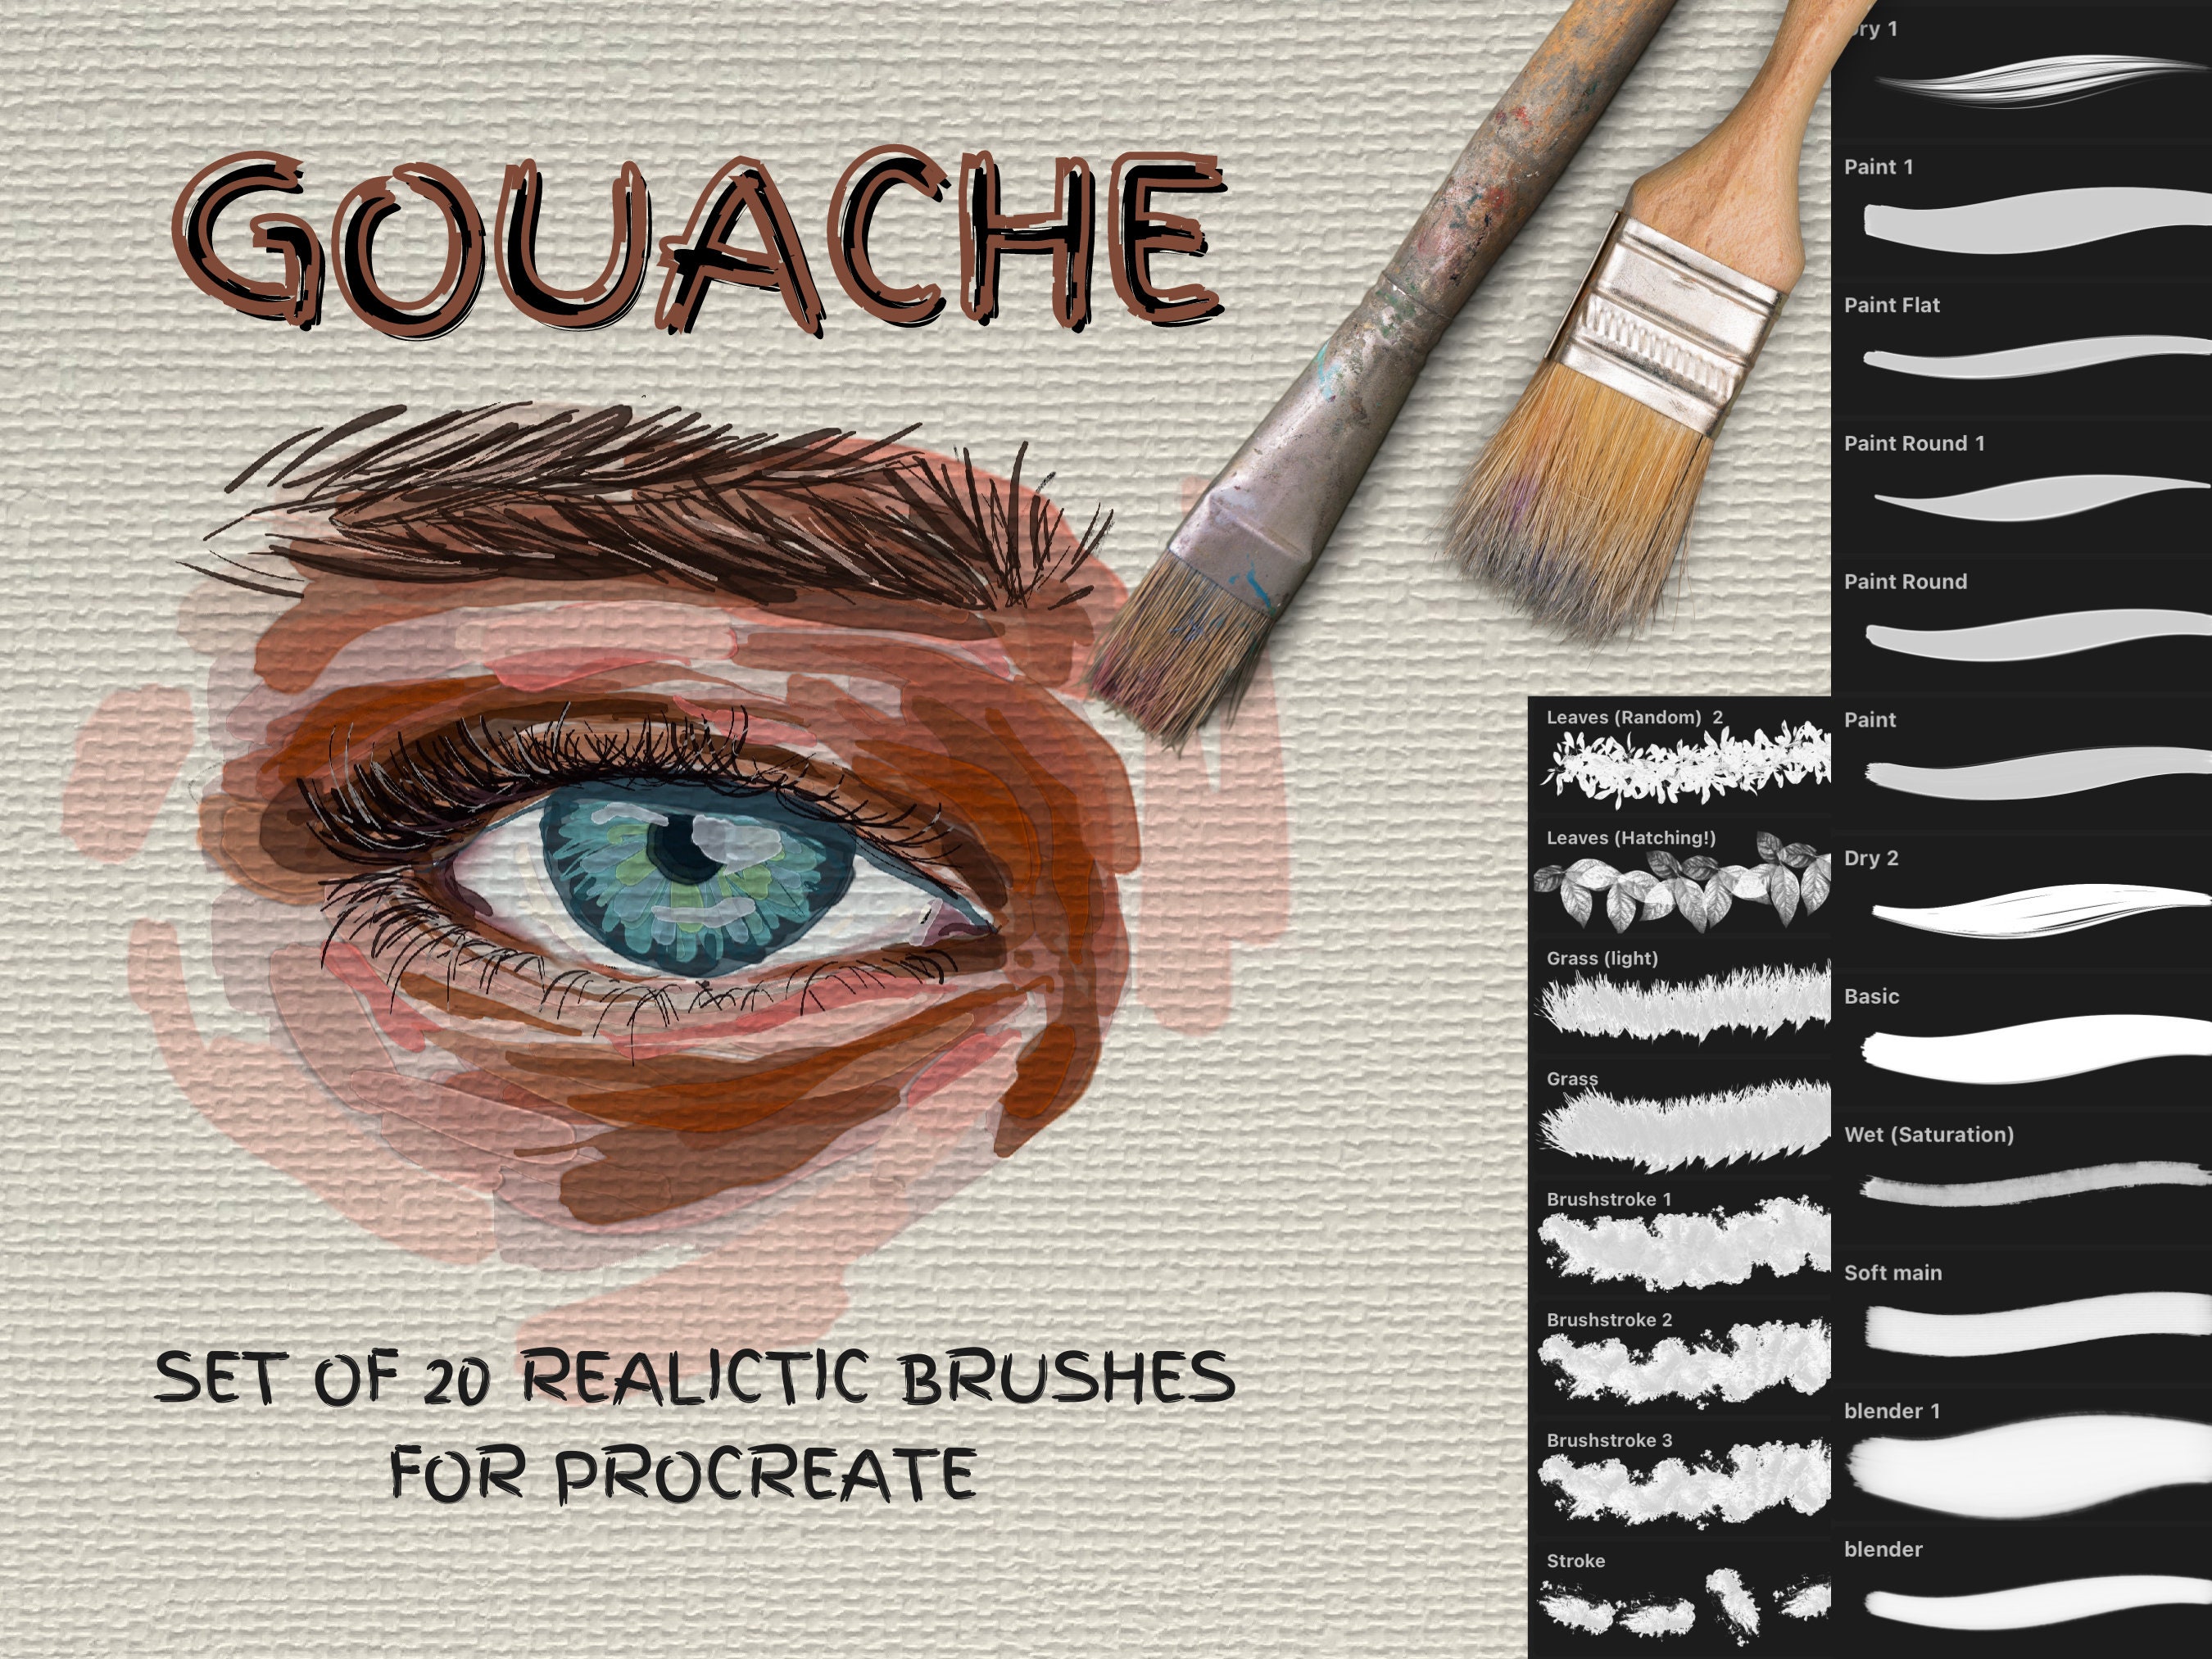 Gouache Brushes for Procreate – MasterBundles